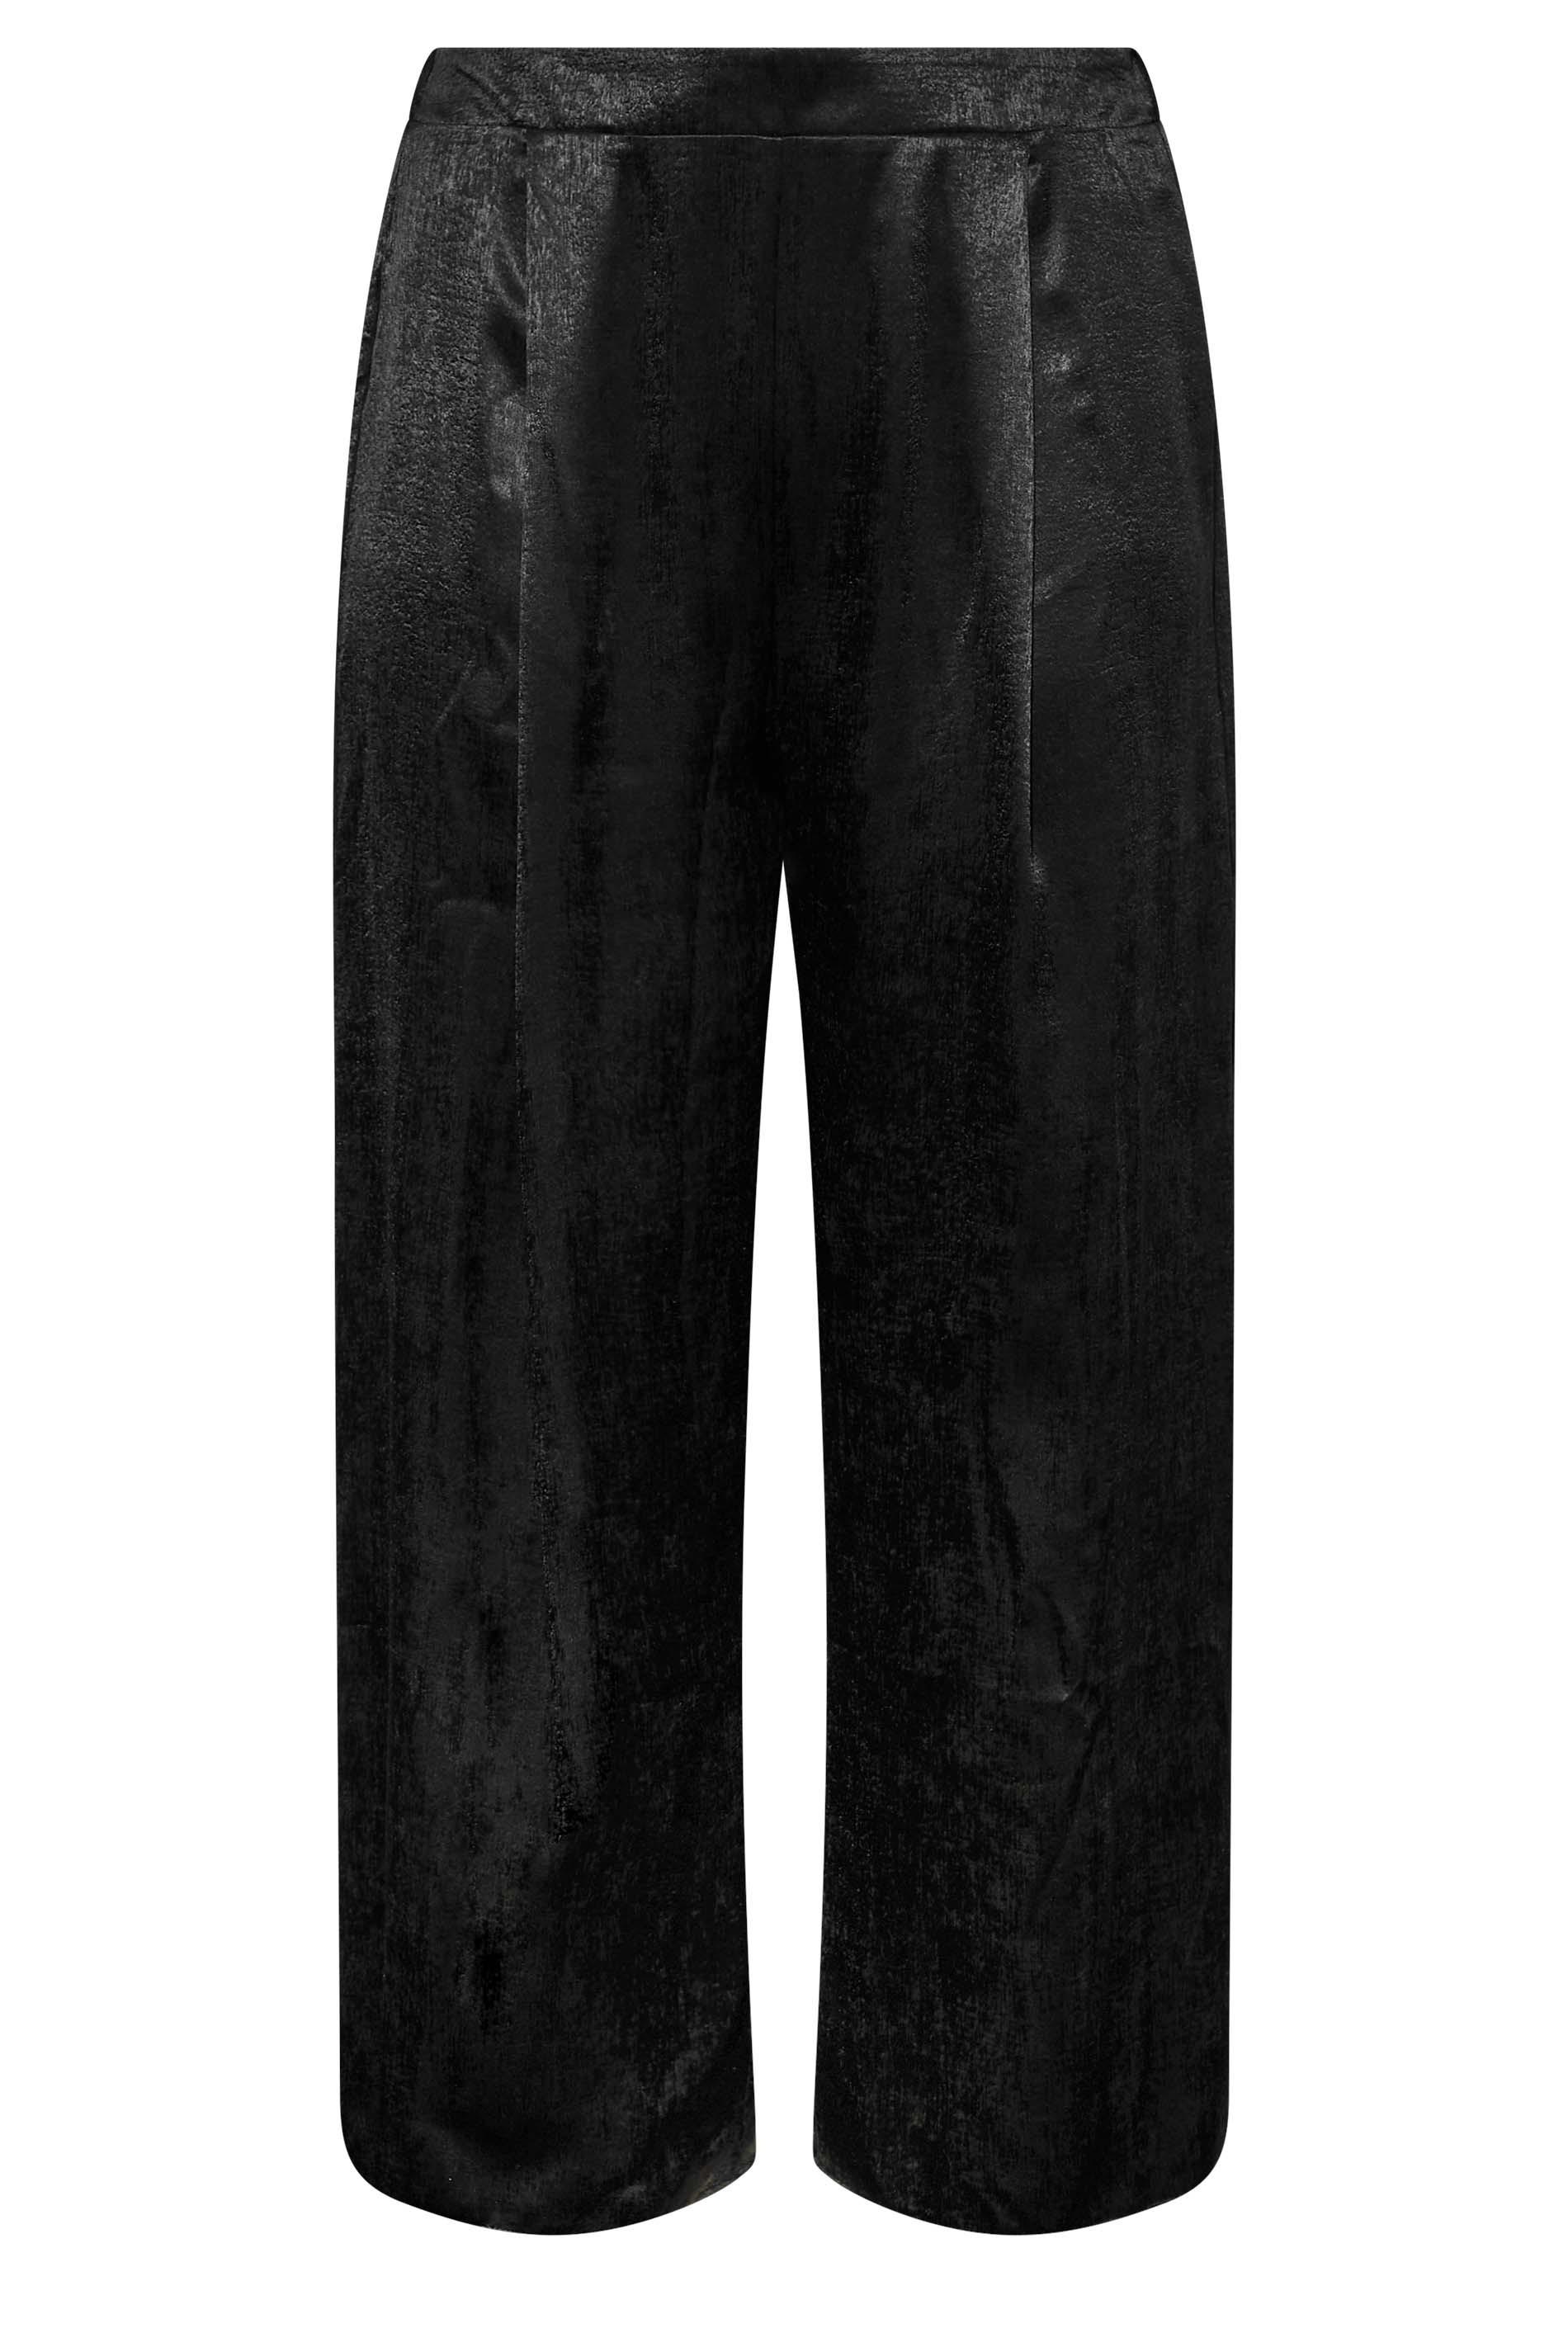 Black Satin Pants Plus Size